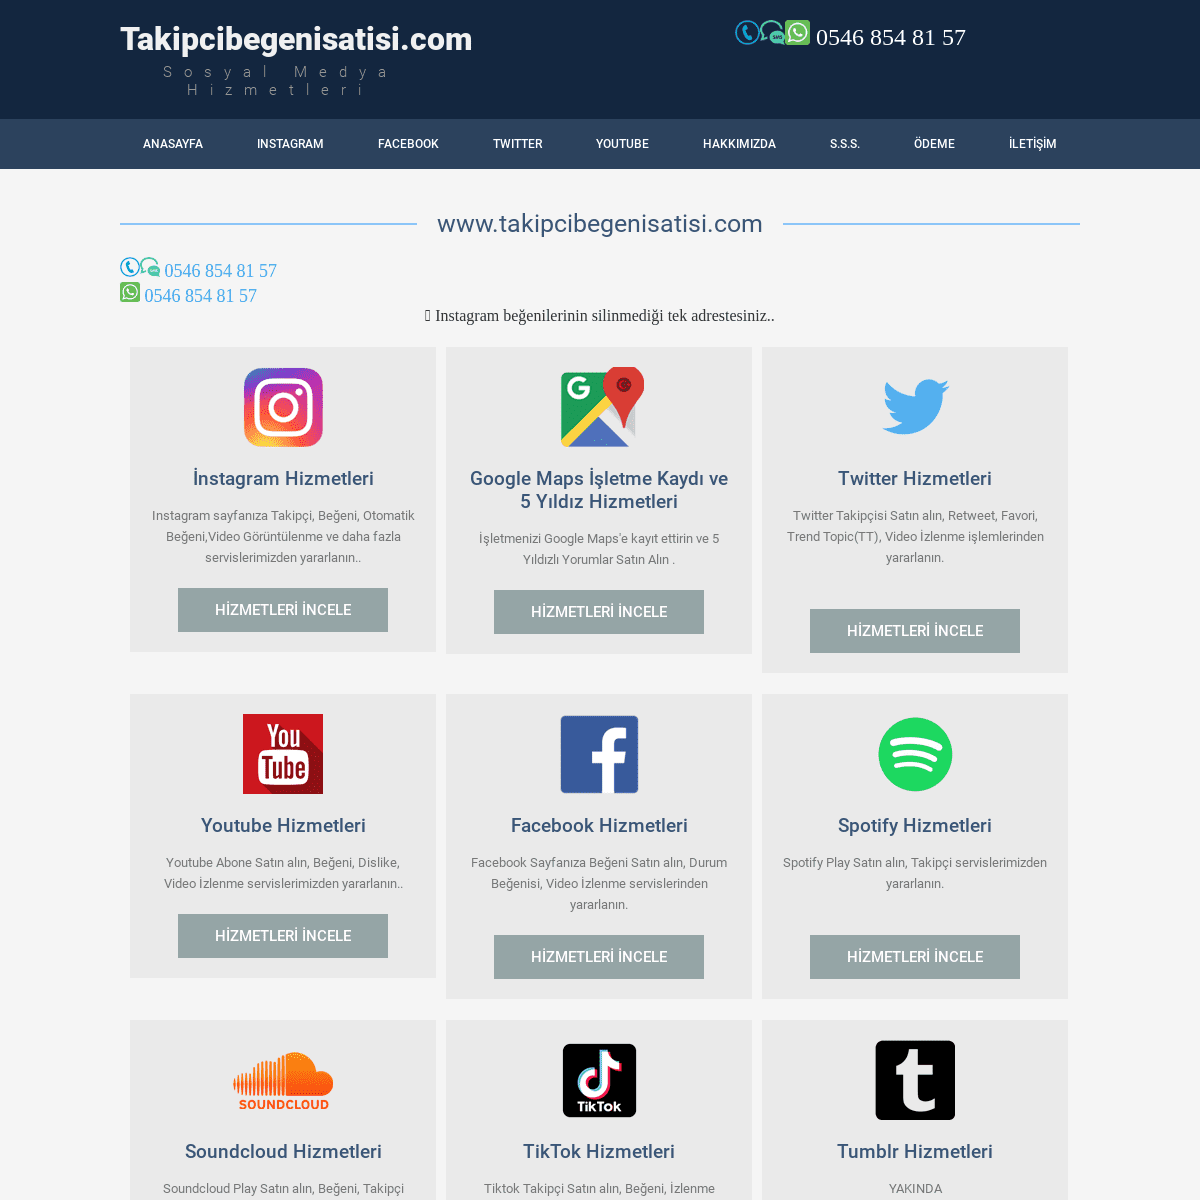 A complete backup of takipcibegenisatisi.com